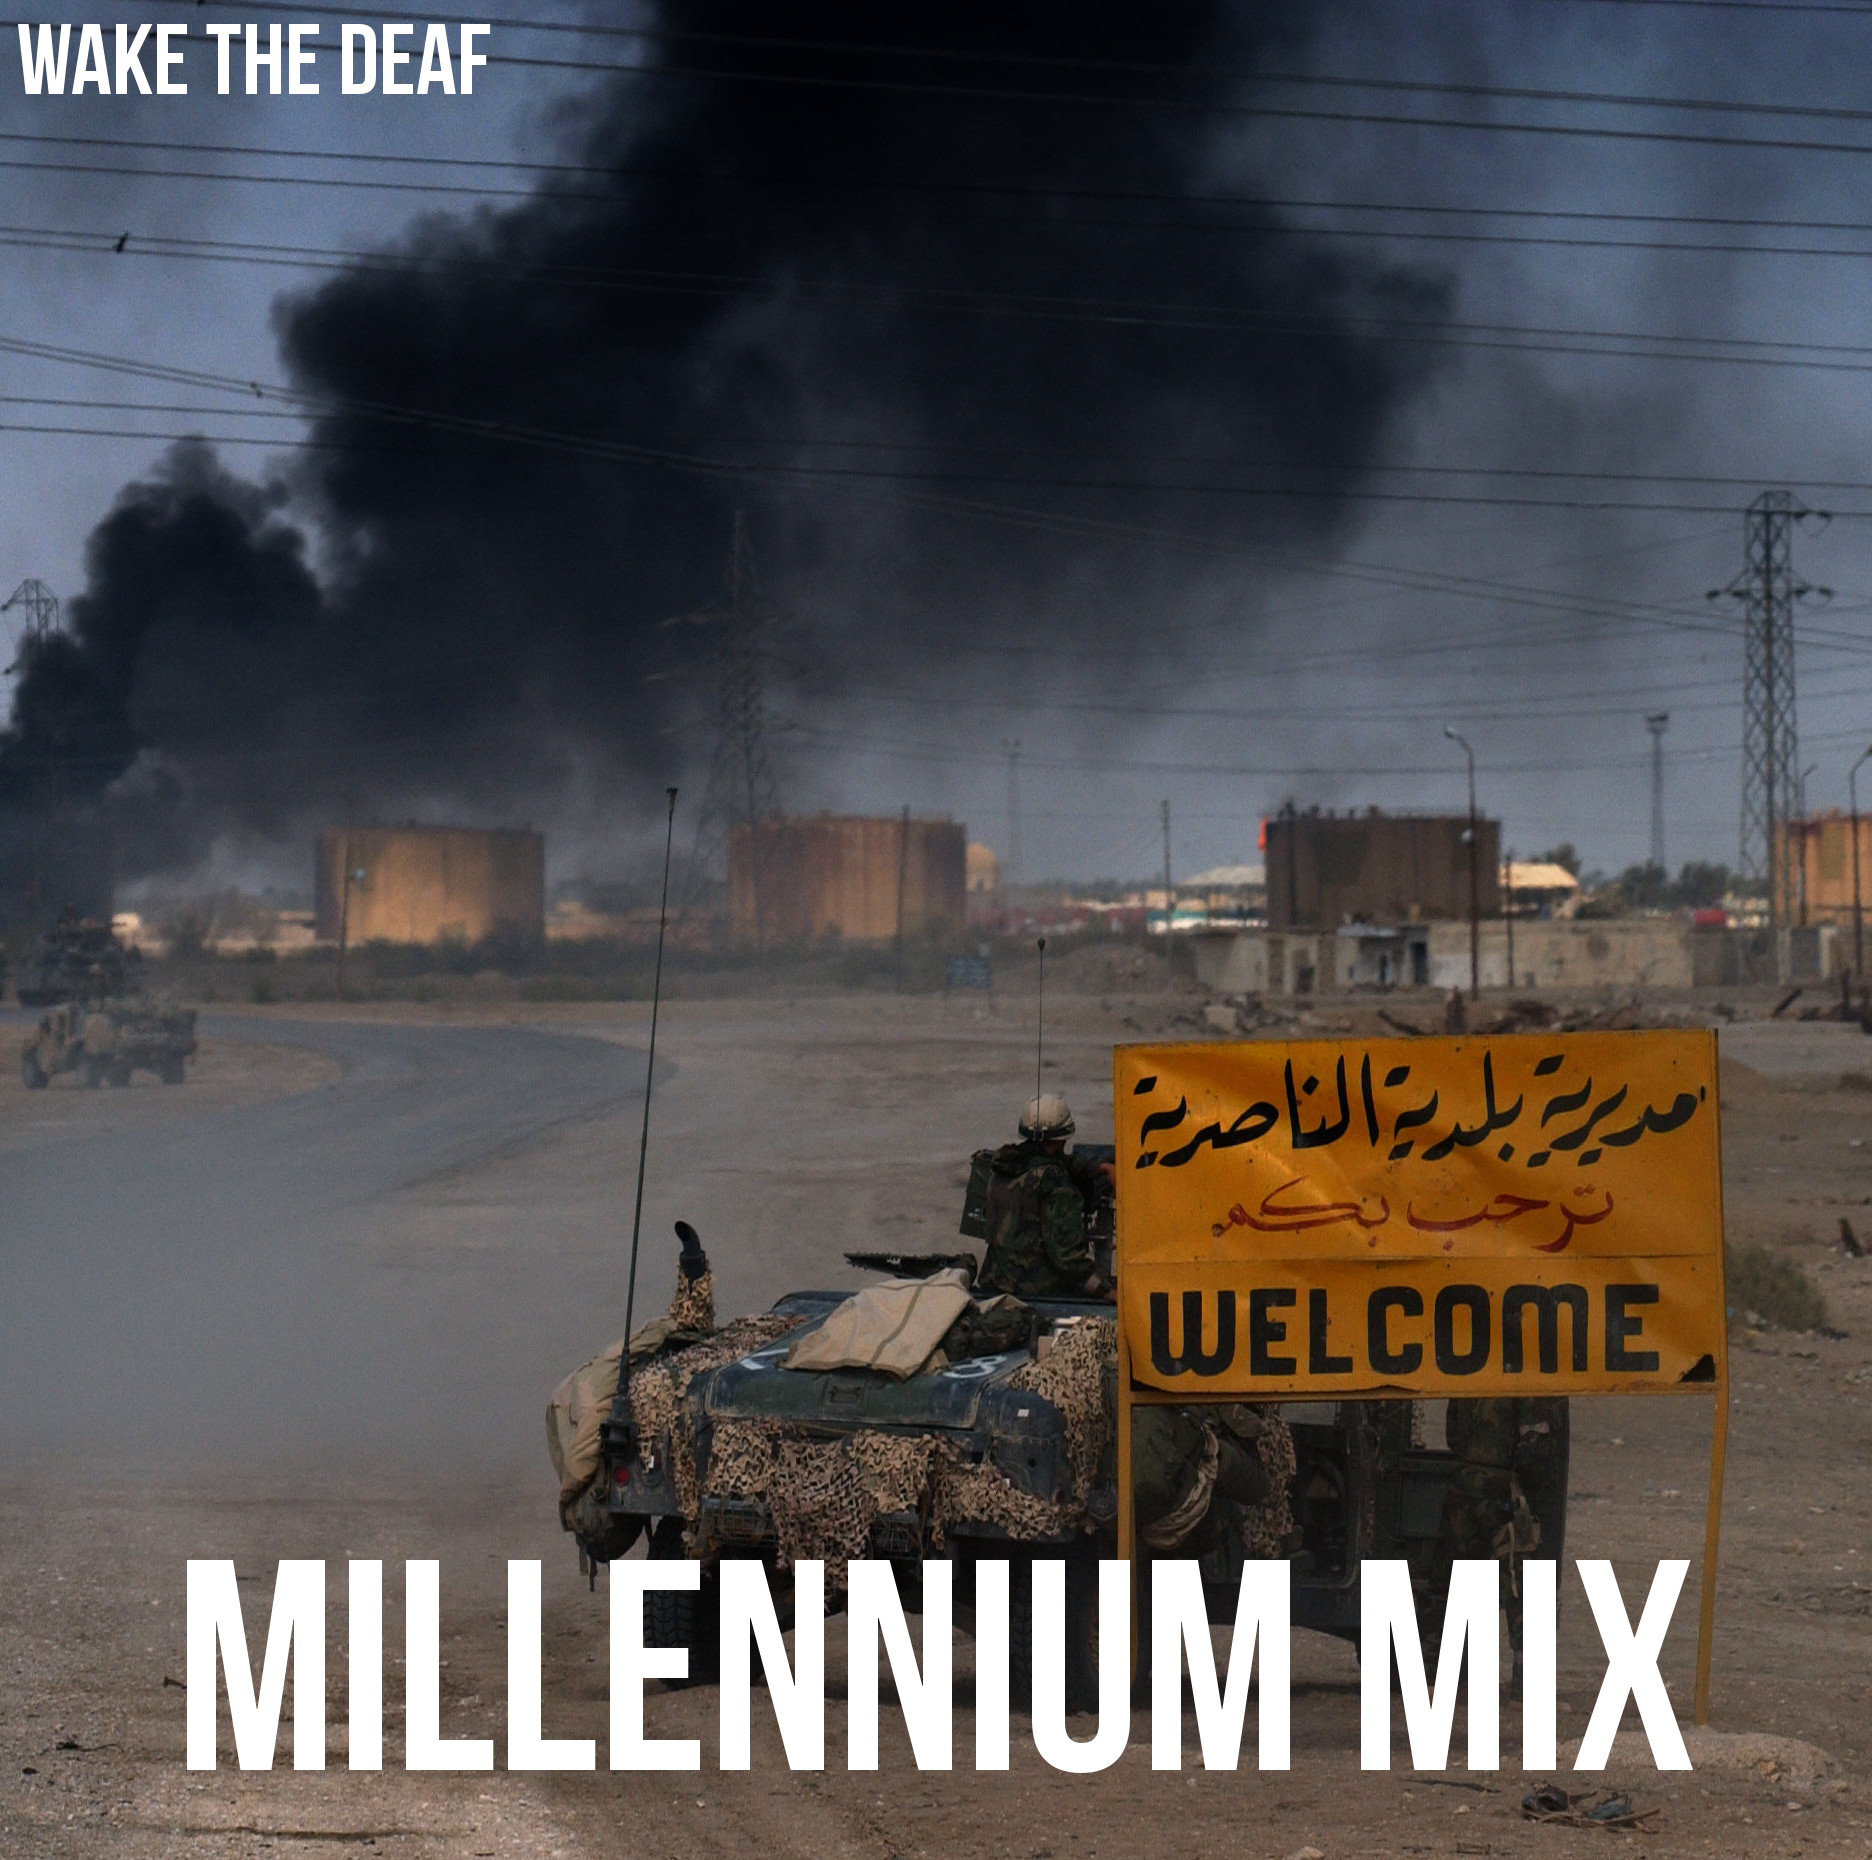 Millennium mix 2003